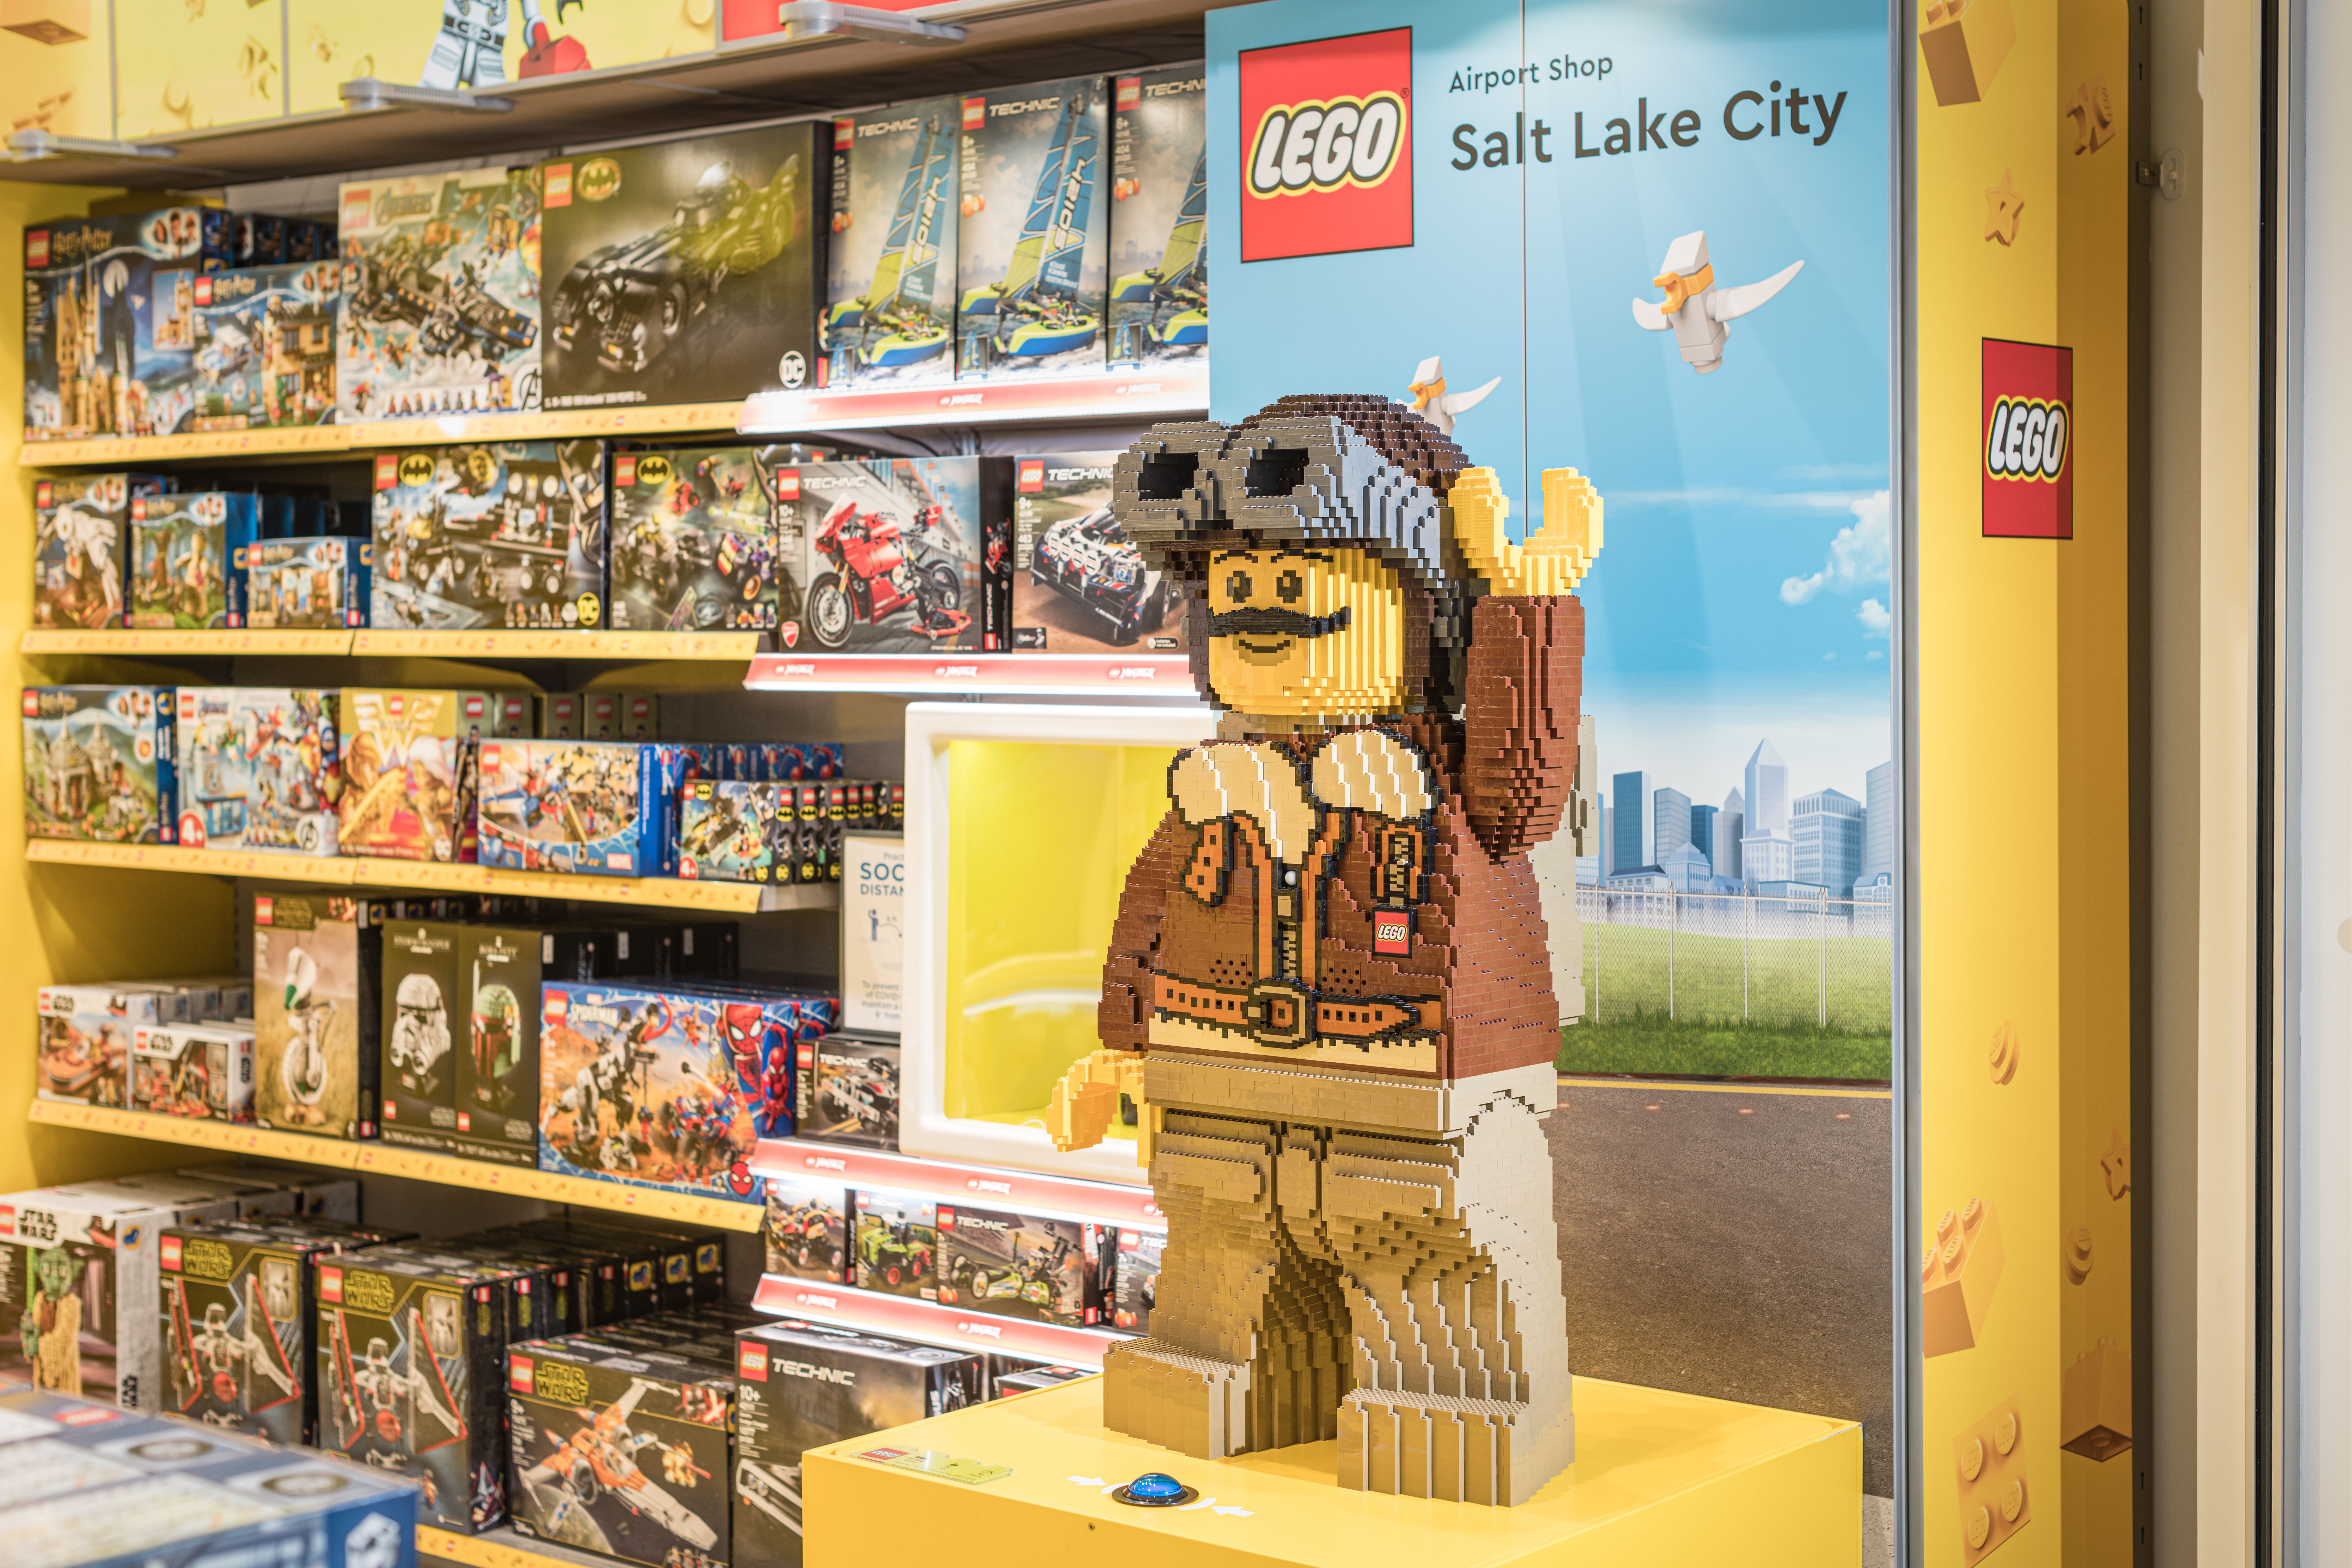 Nation's LEGO airport store Salt City